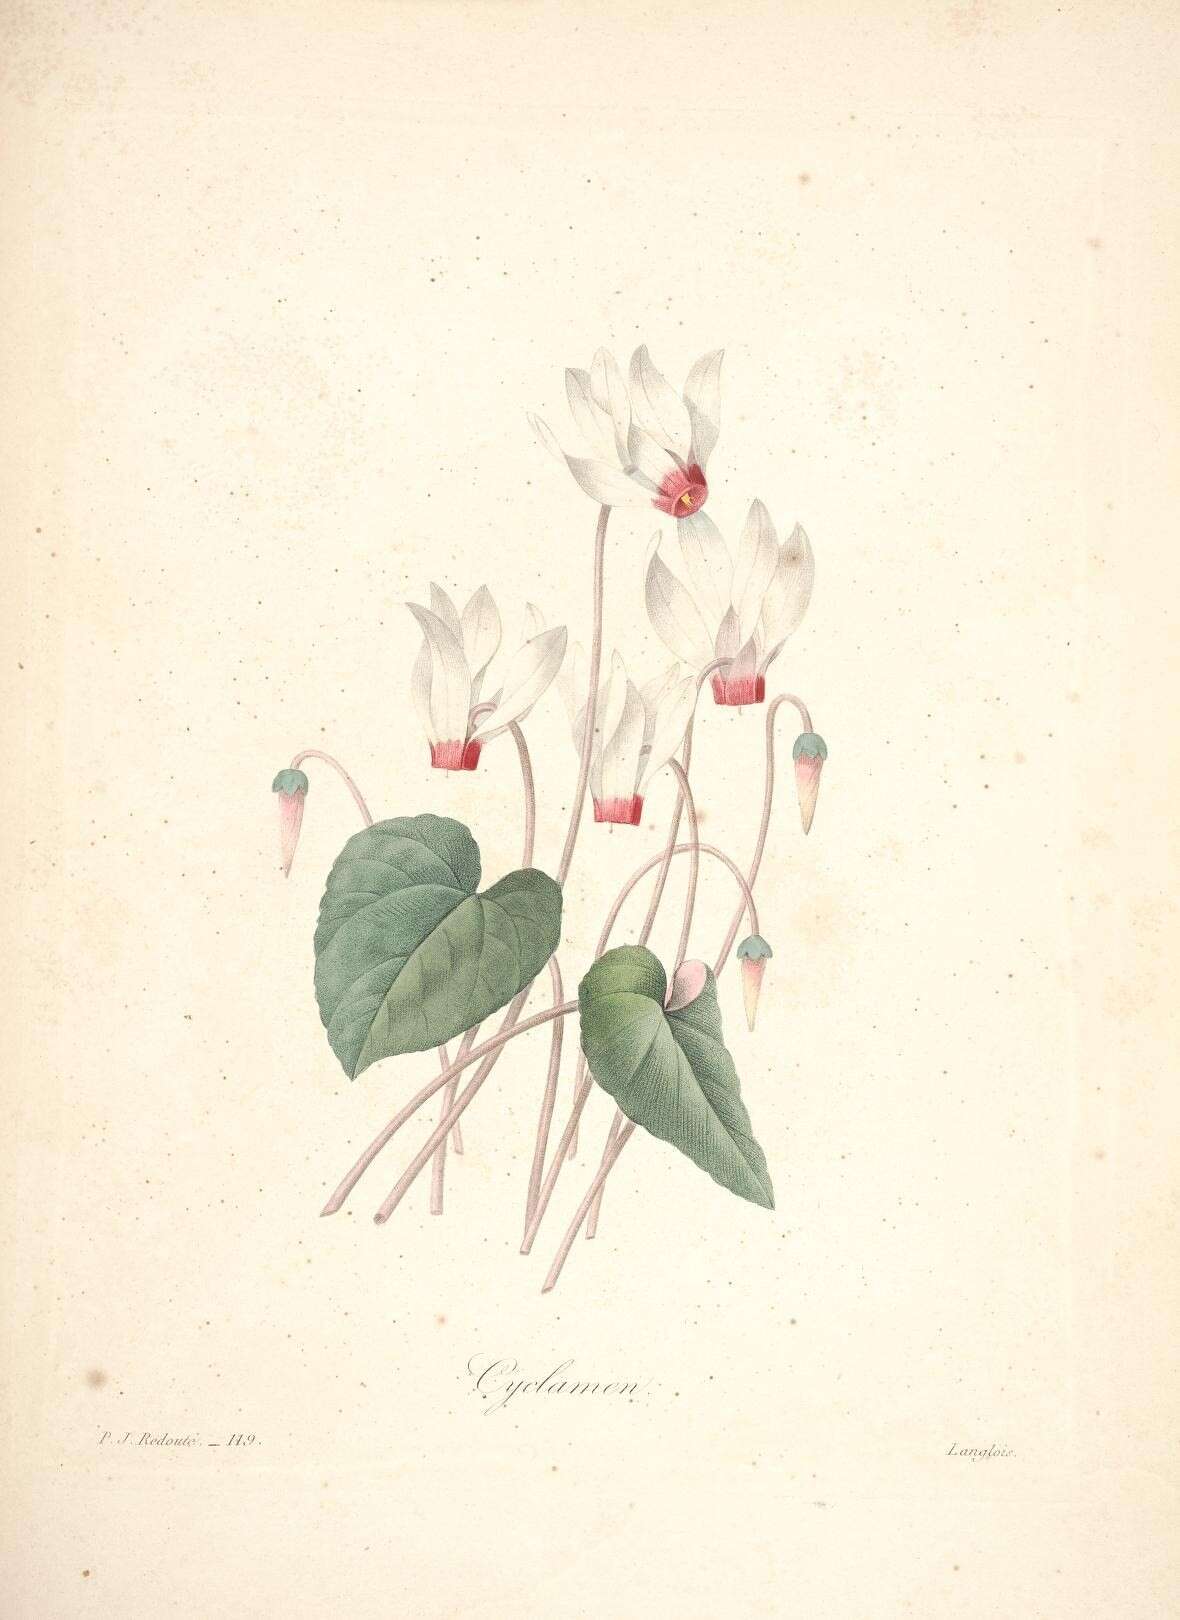 Image of florist's cyclamen